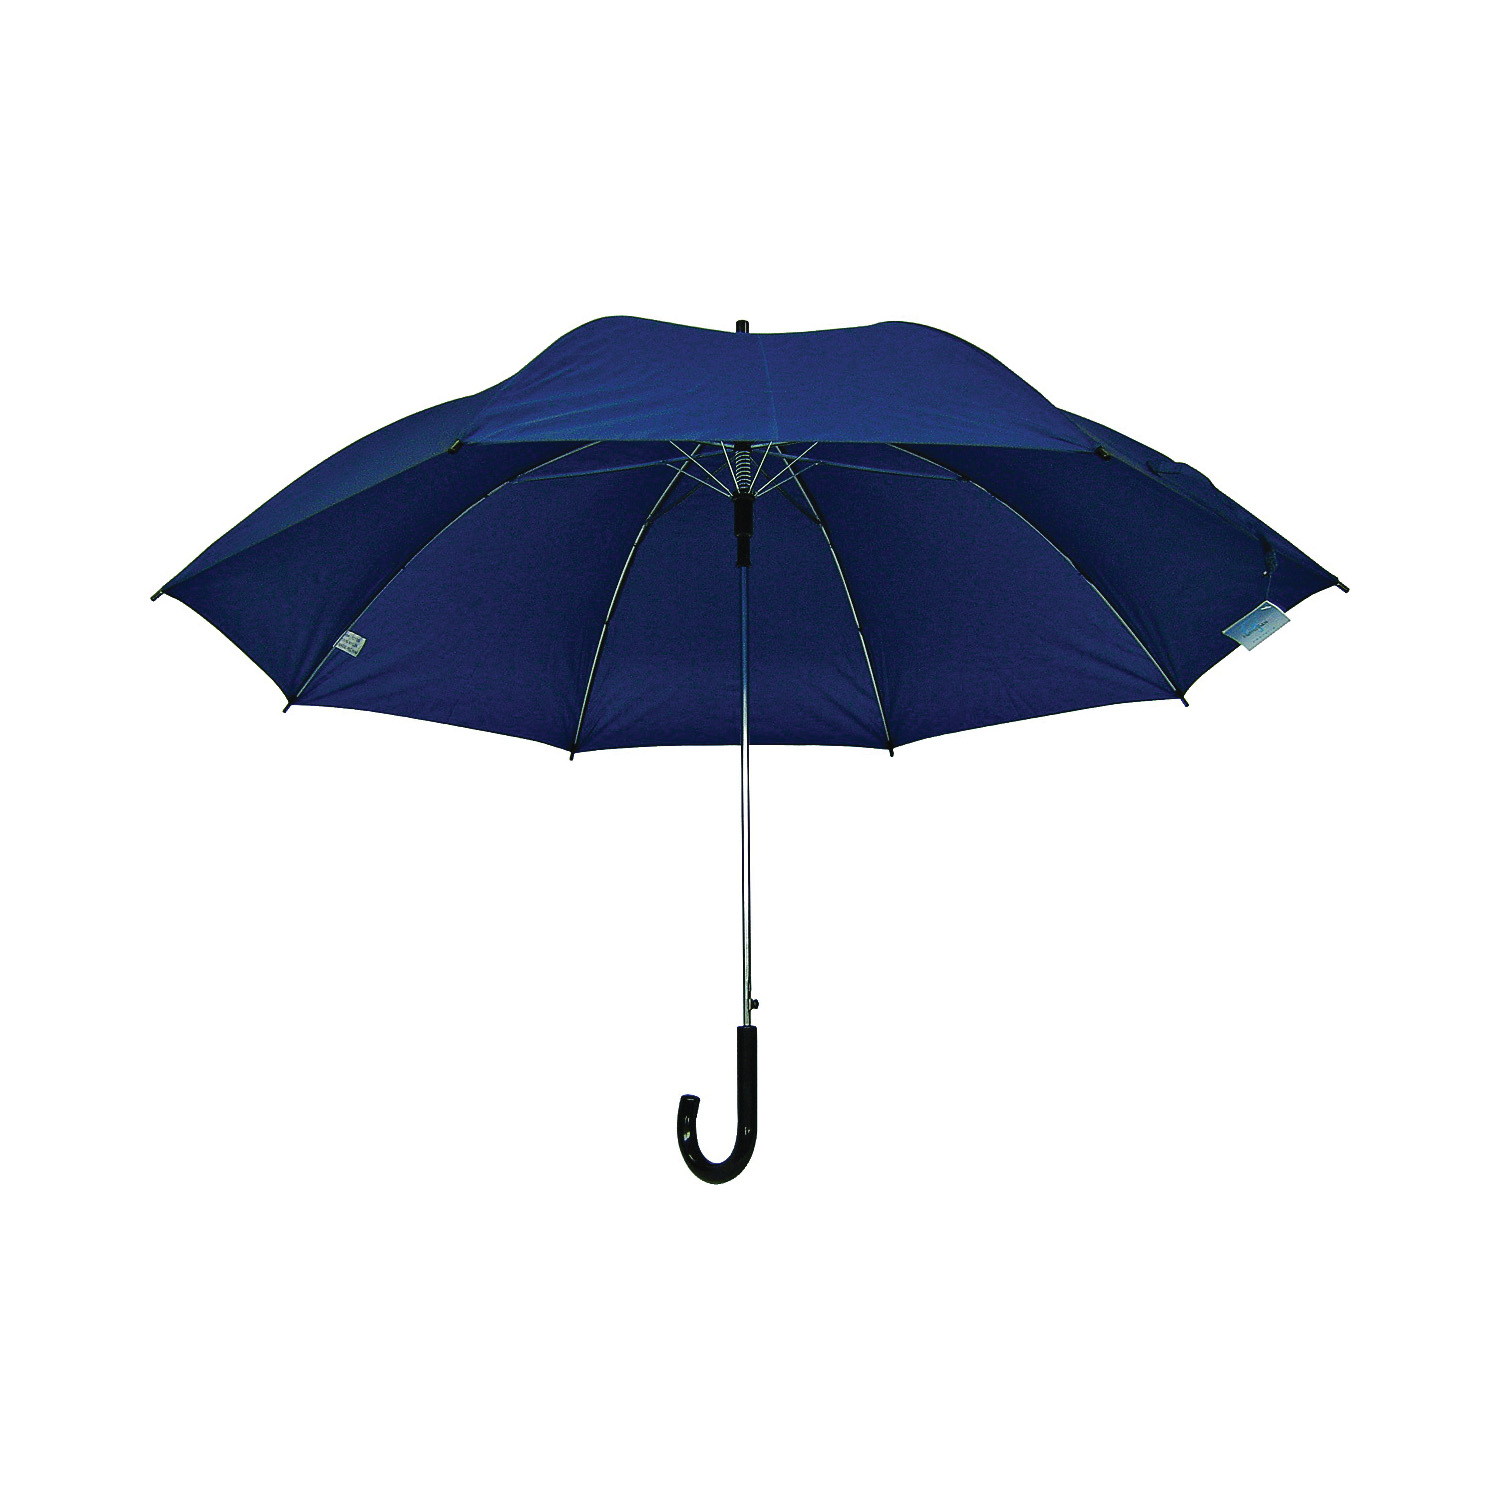 Deluxe Rain Umbrella, Nylon Fabric, Navy Fabric, 27 in